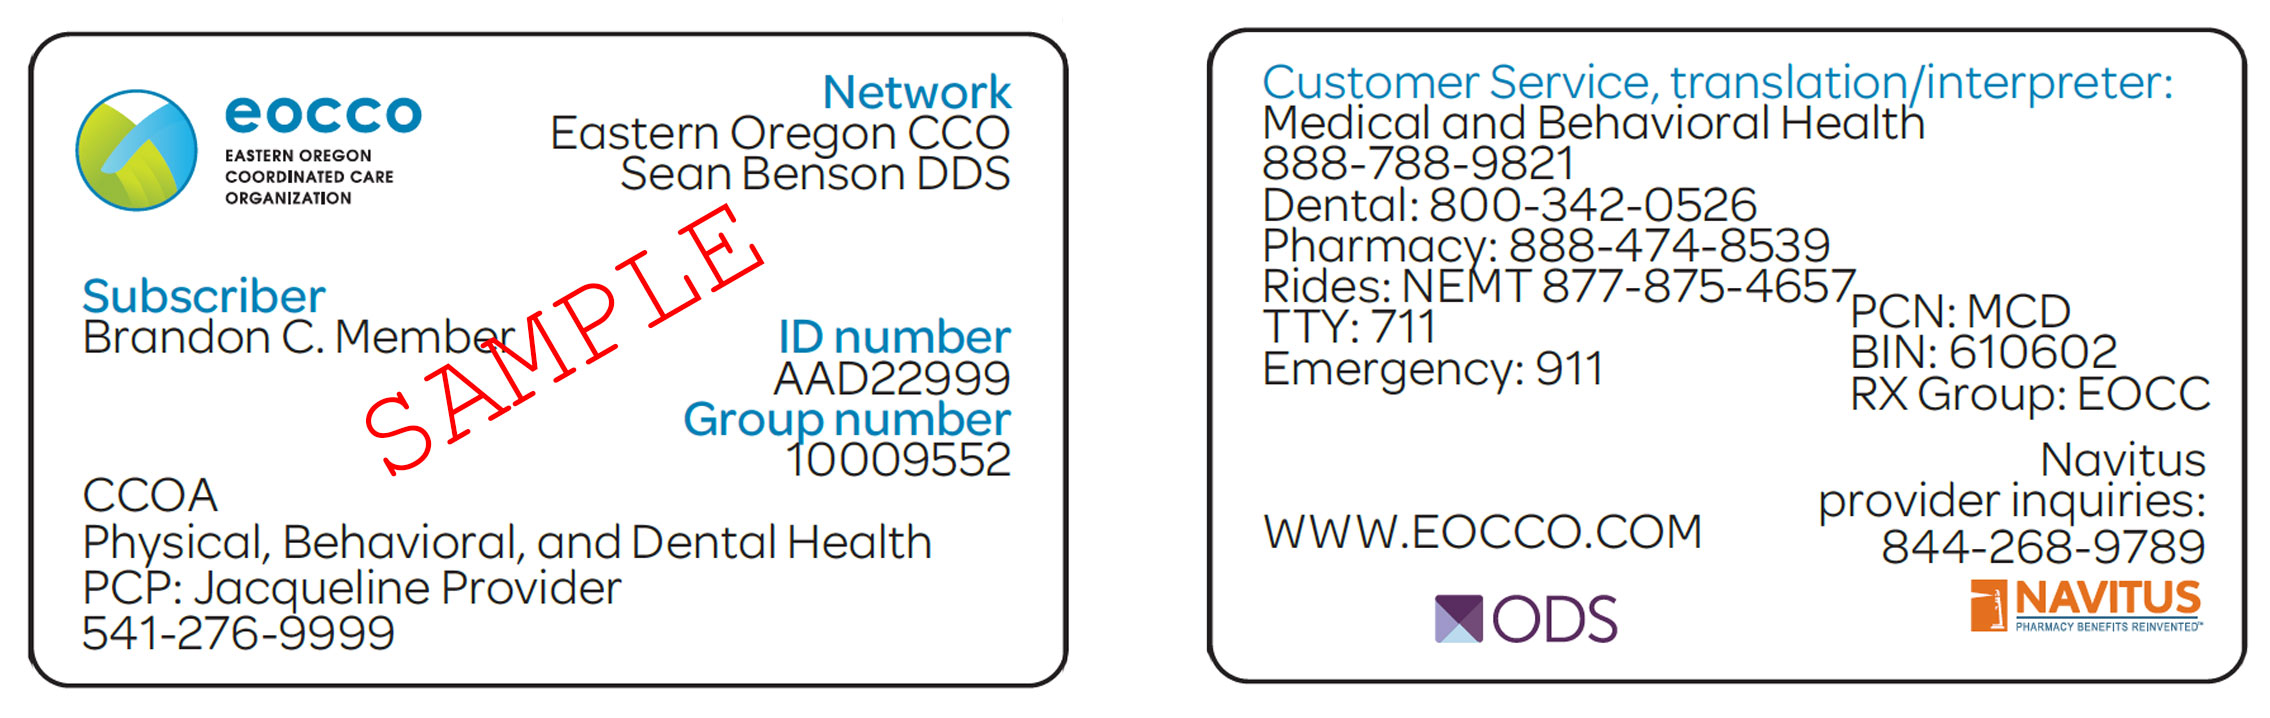 Sample EOCCO member ID card